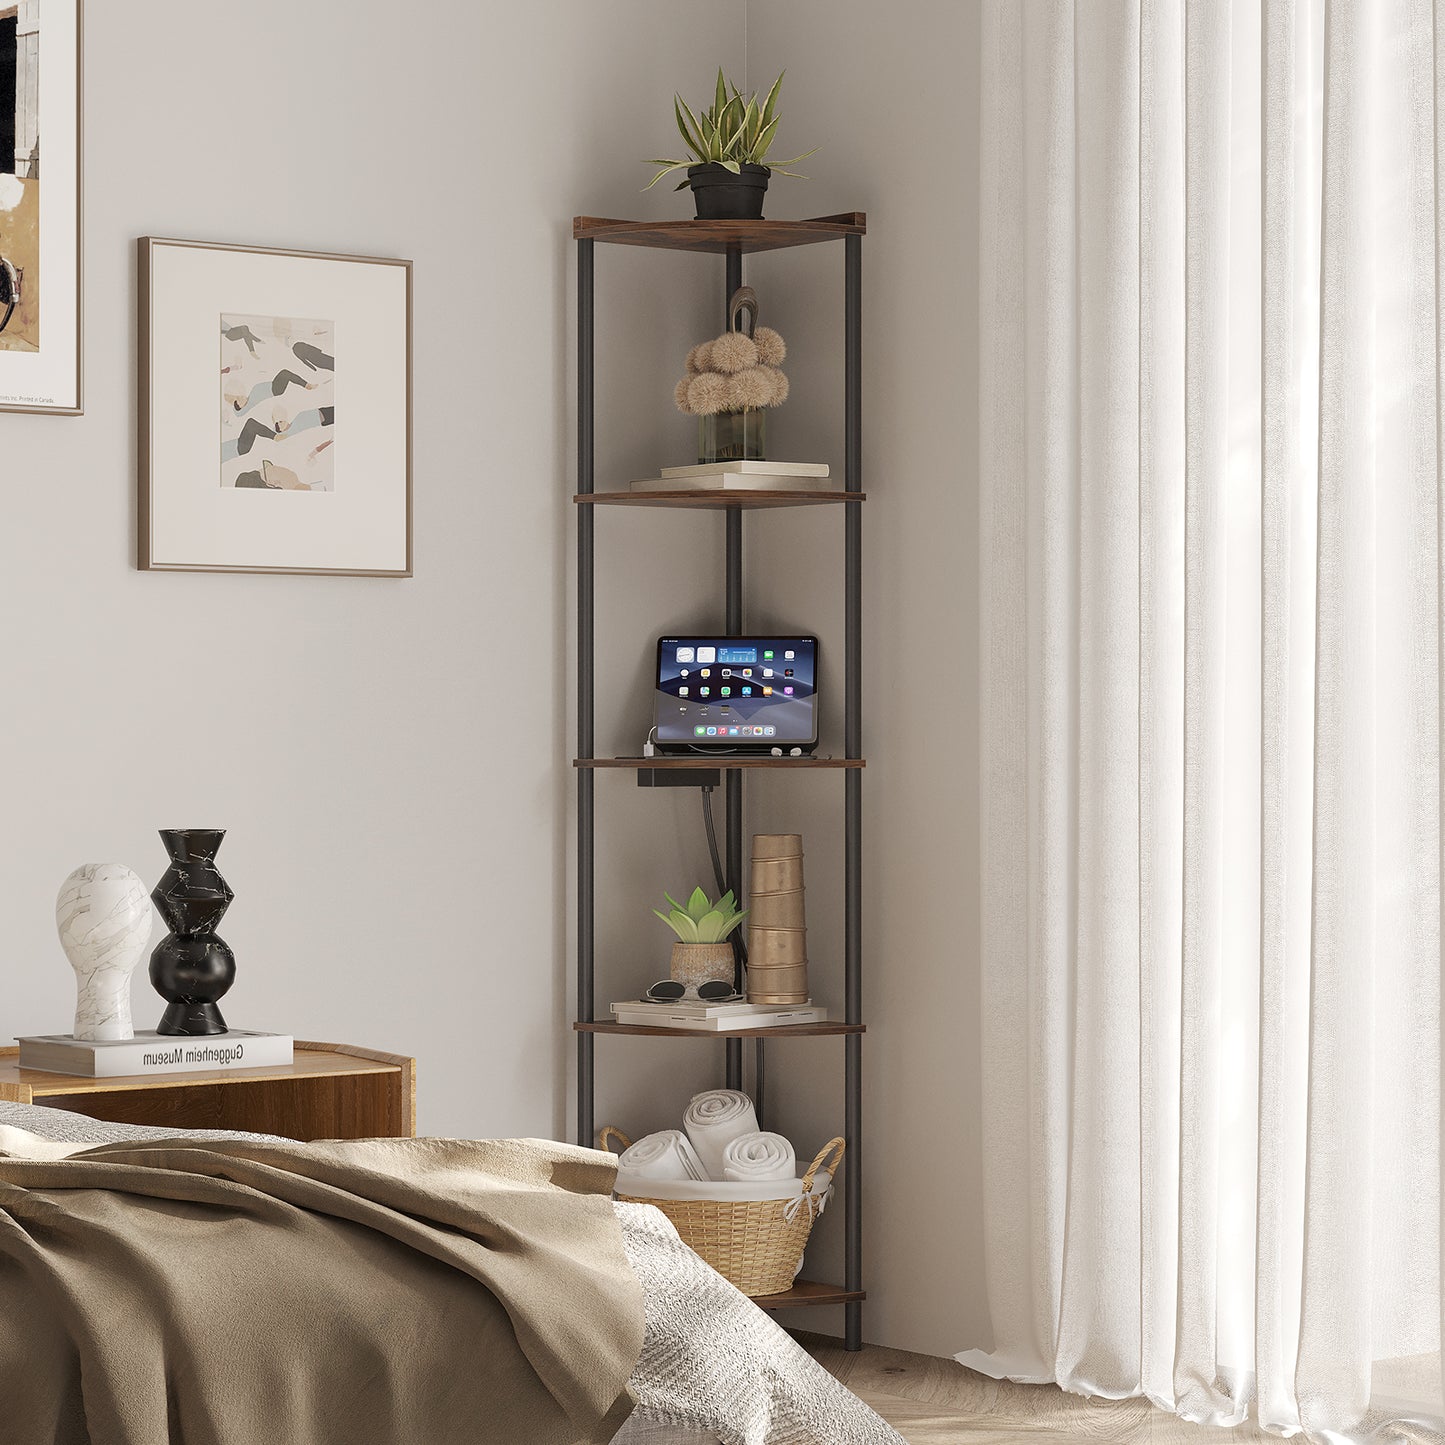 SUNMORY 5 Tier Corner Shelf Stand With 2 USB Ports & 2 Power Outlet,65" Tall Corner Shelves Display Rack for Living Room Decor